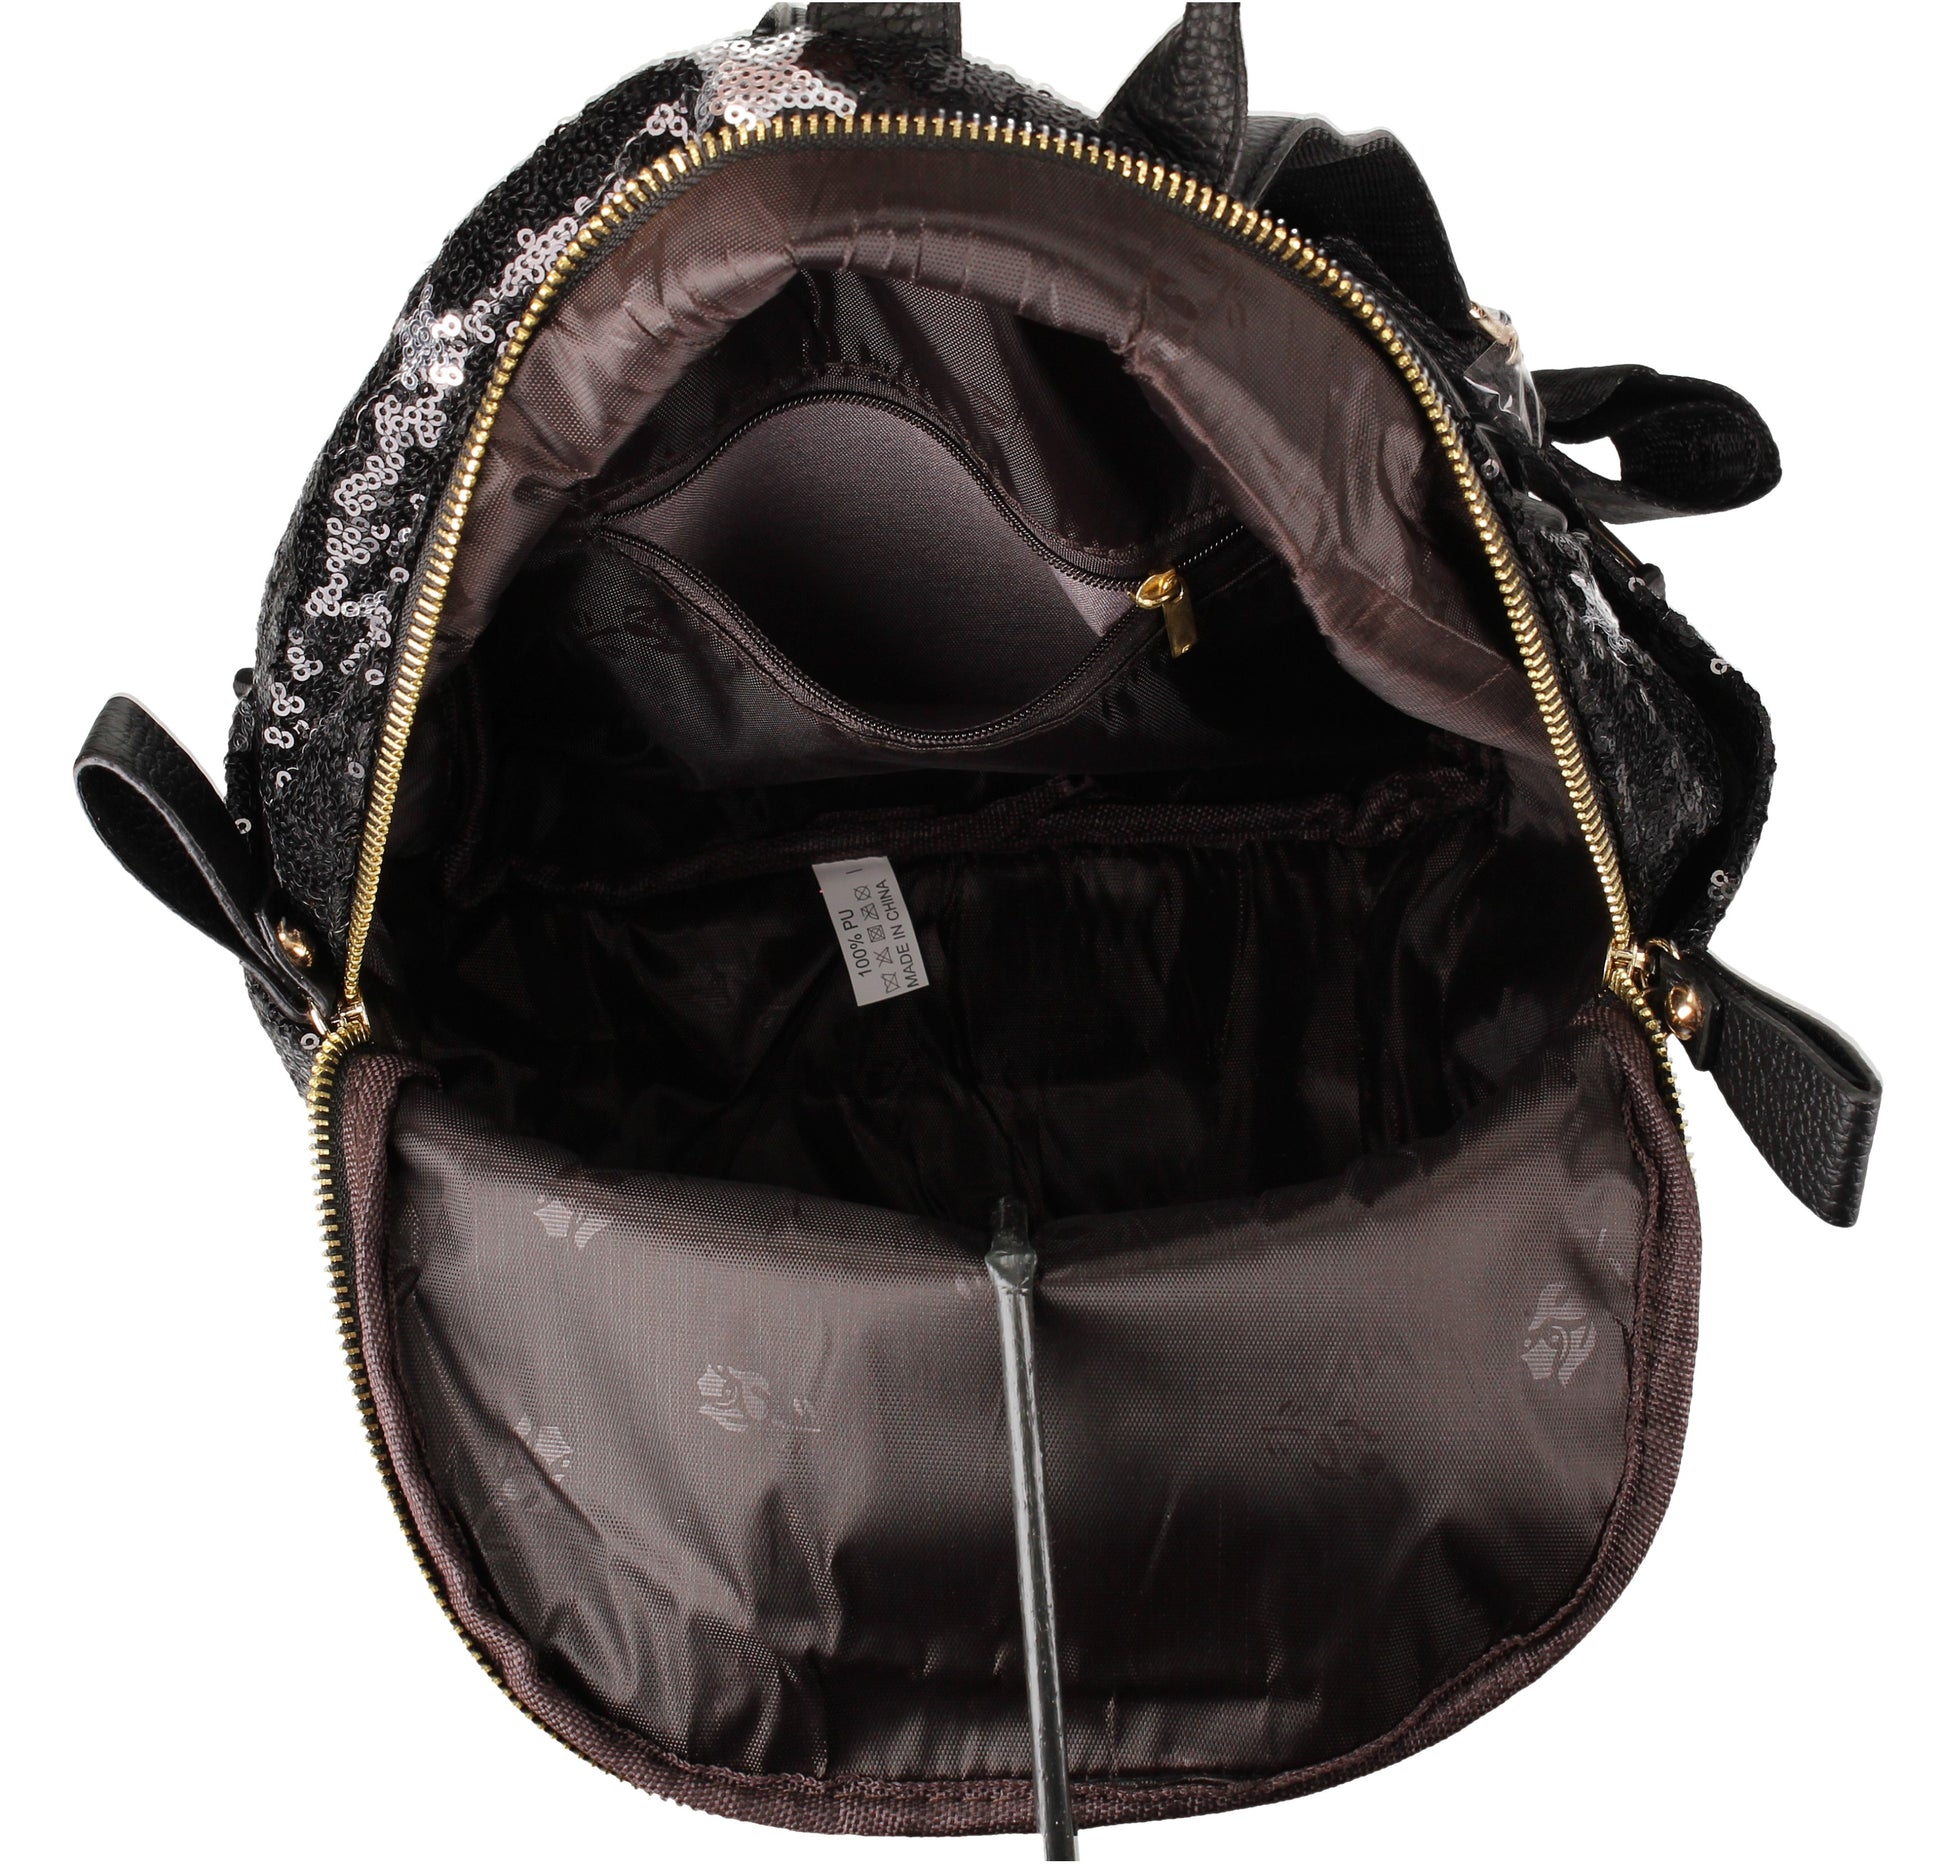 Swanky Swans Carli Backpack Black Perfect Backpack for school!